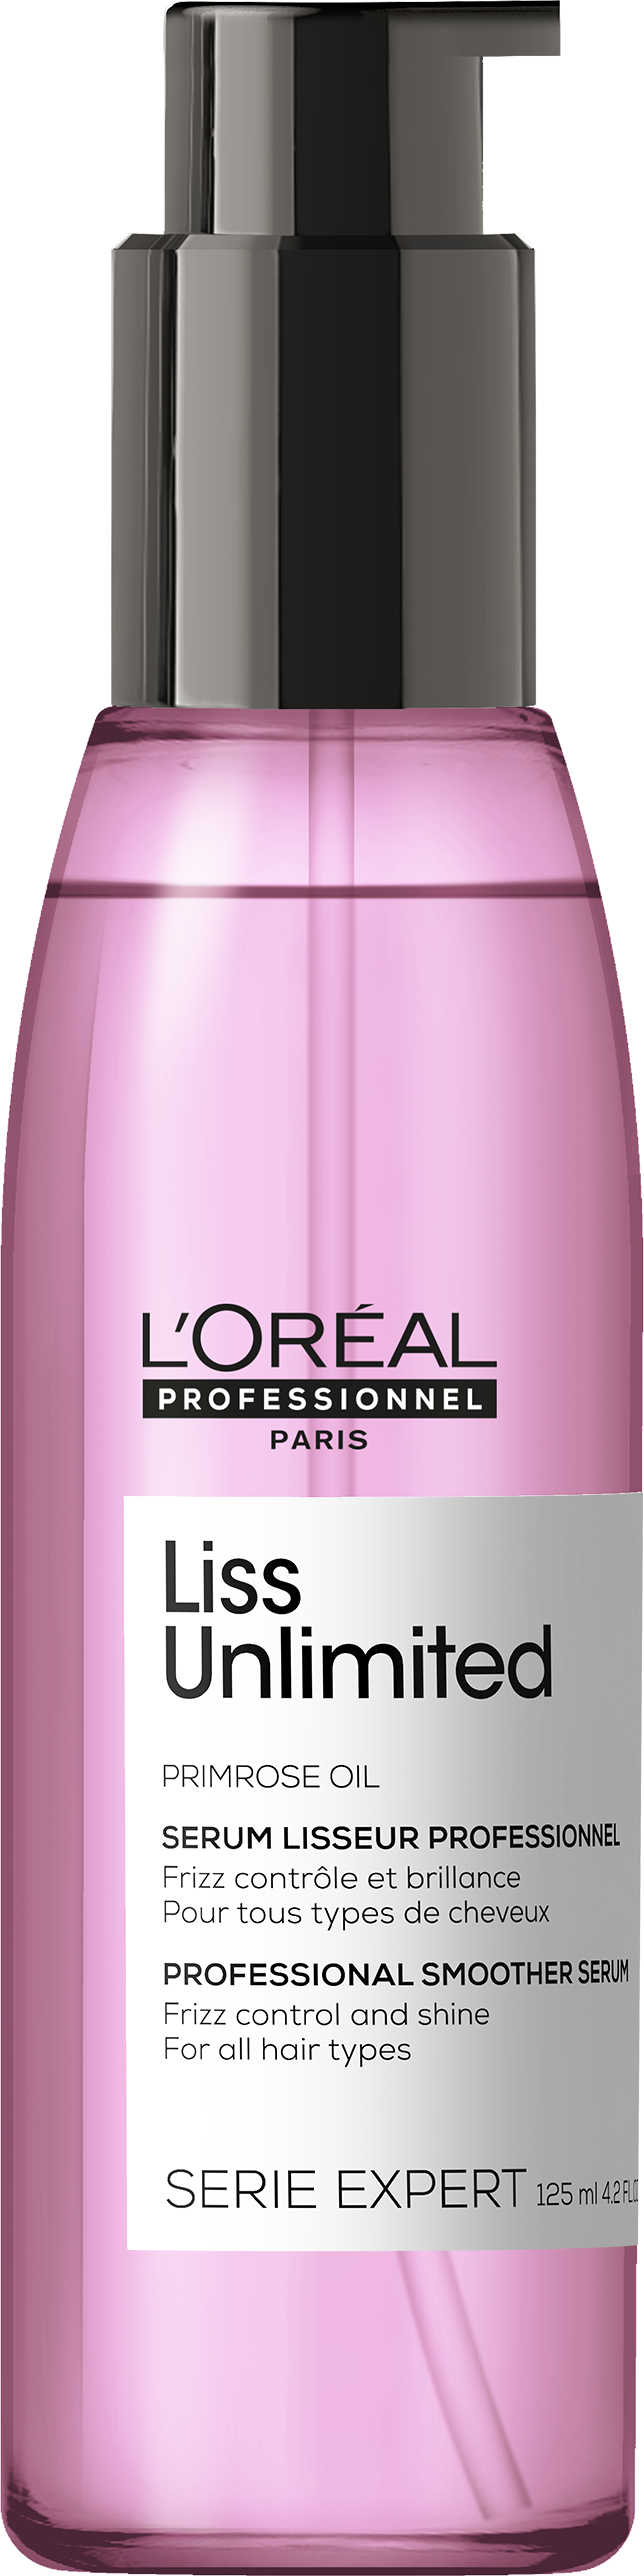 Масло l oreal professionnel. Loreal professional Liss Unlimited .масло для непослушных волос , 125 мл. Лореаль Liss Unlimited. Loreal professional масло Liss Unlimited. L'Oreal Liss Unlimited.